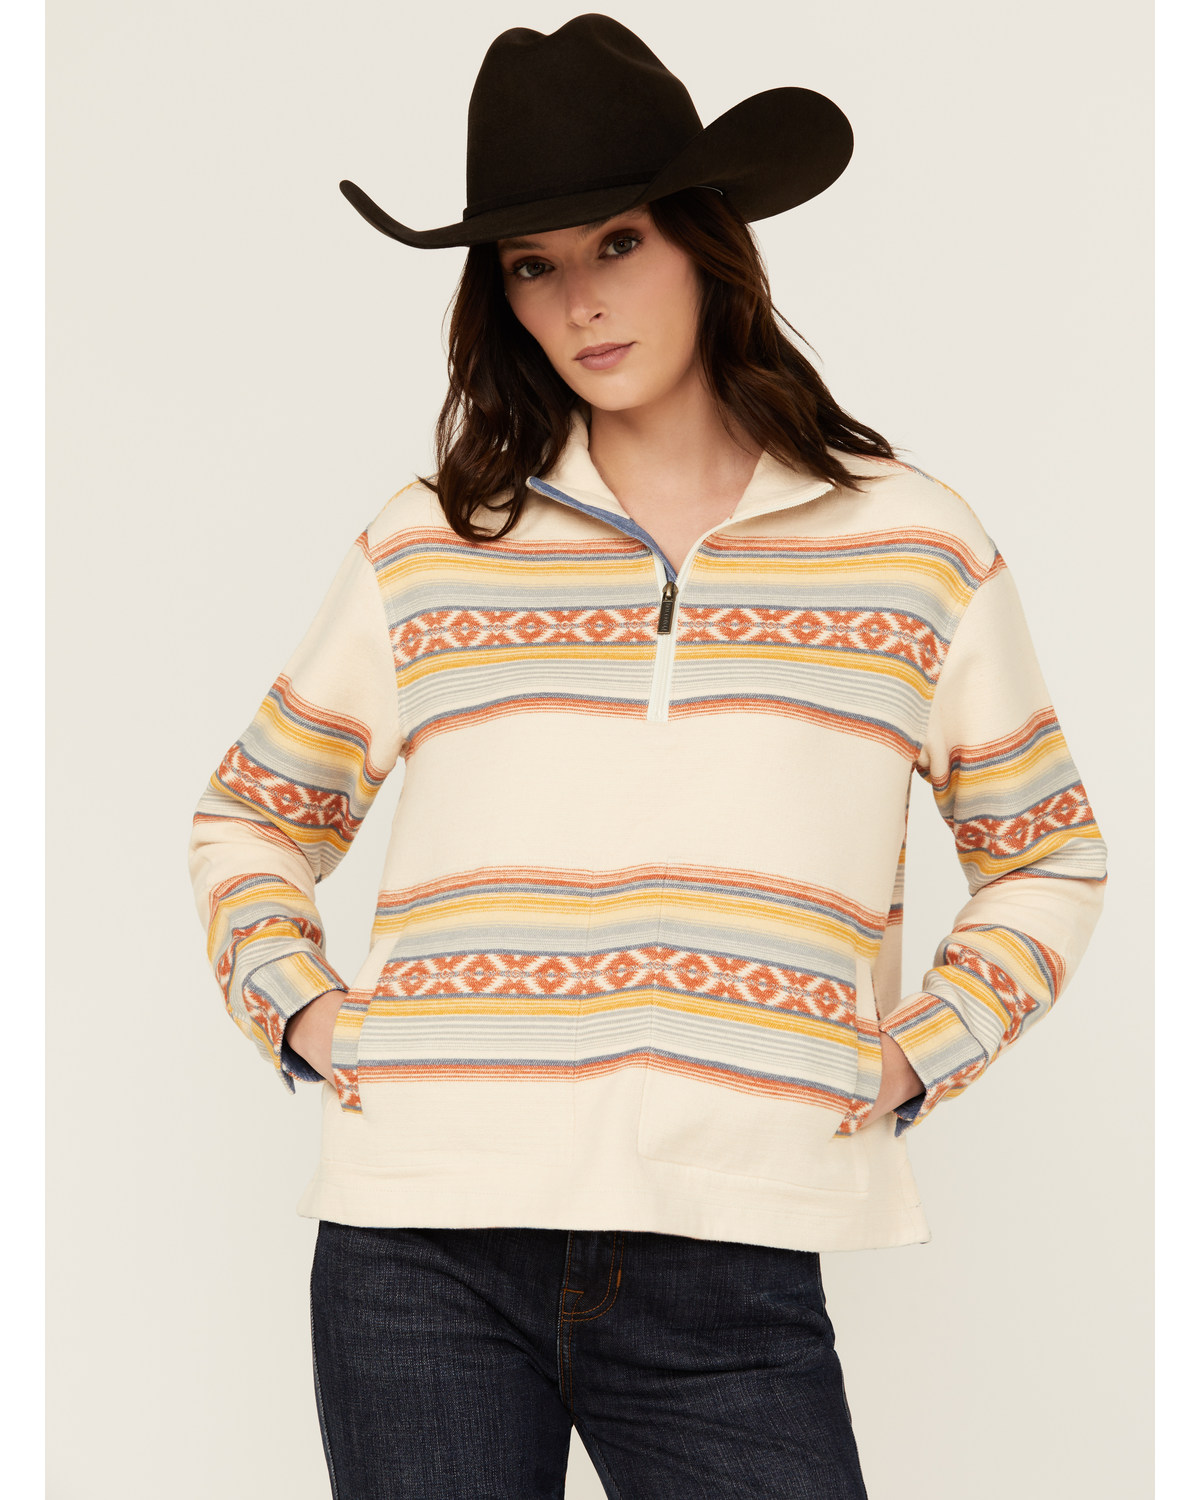 Pendleton Women's Striped Sweater